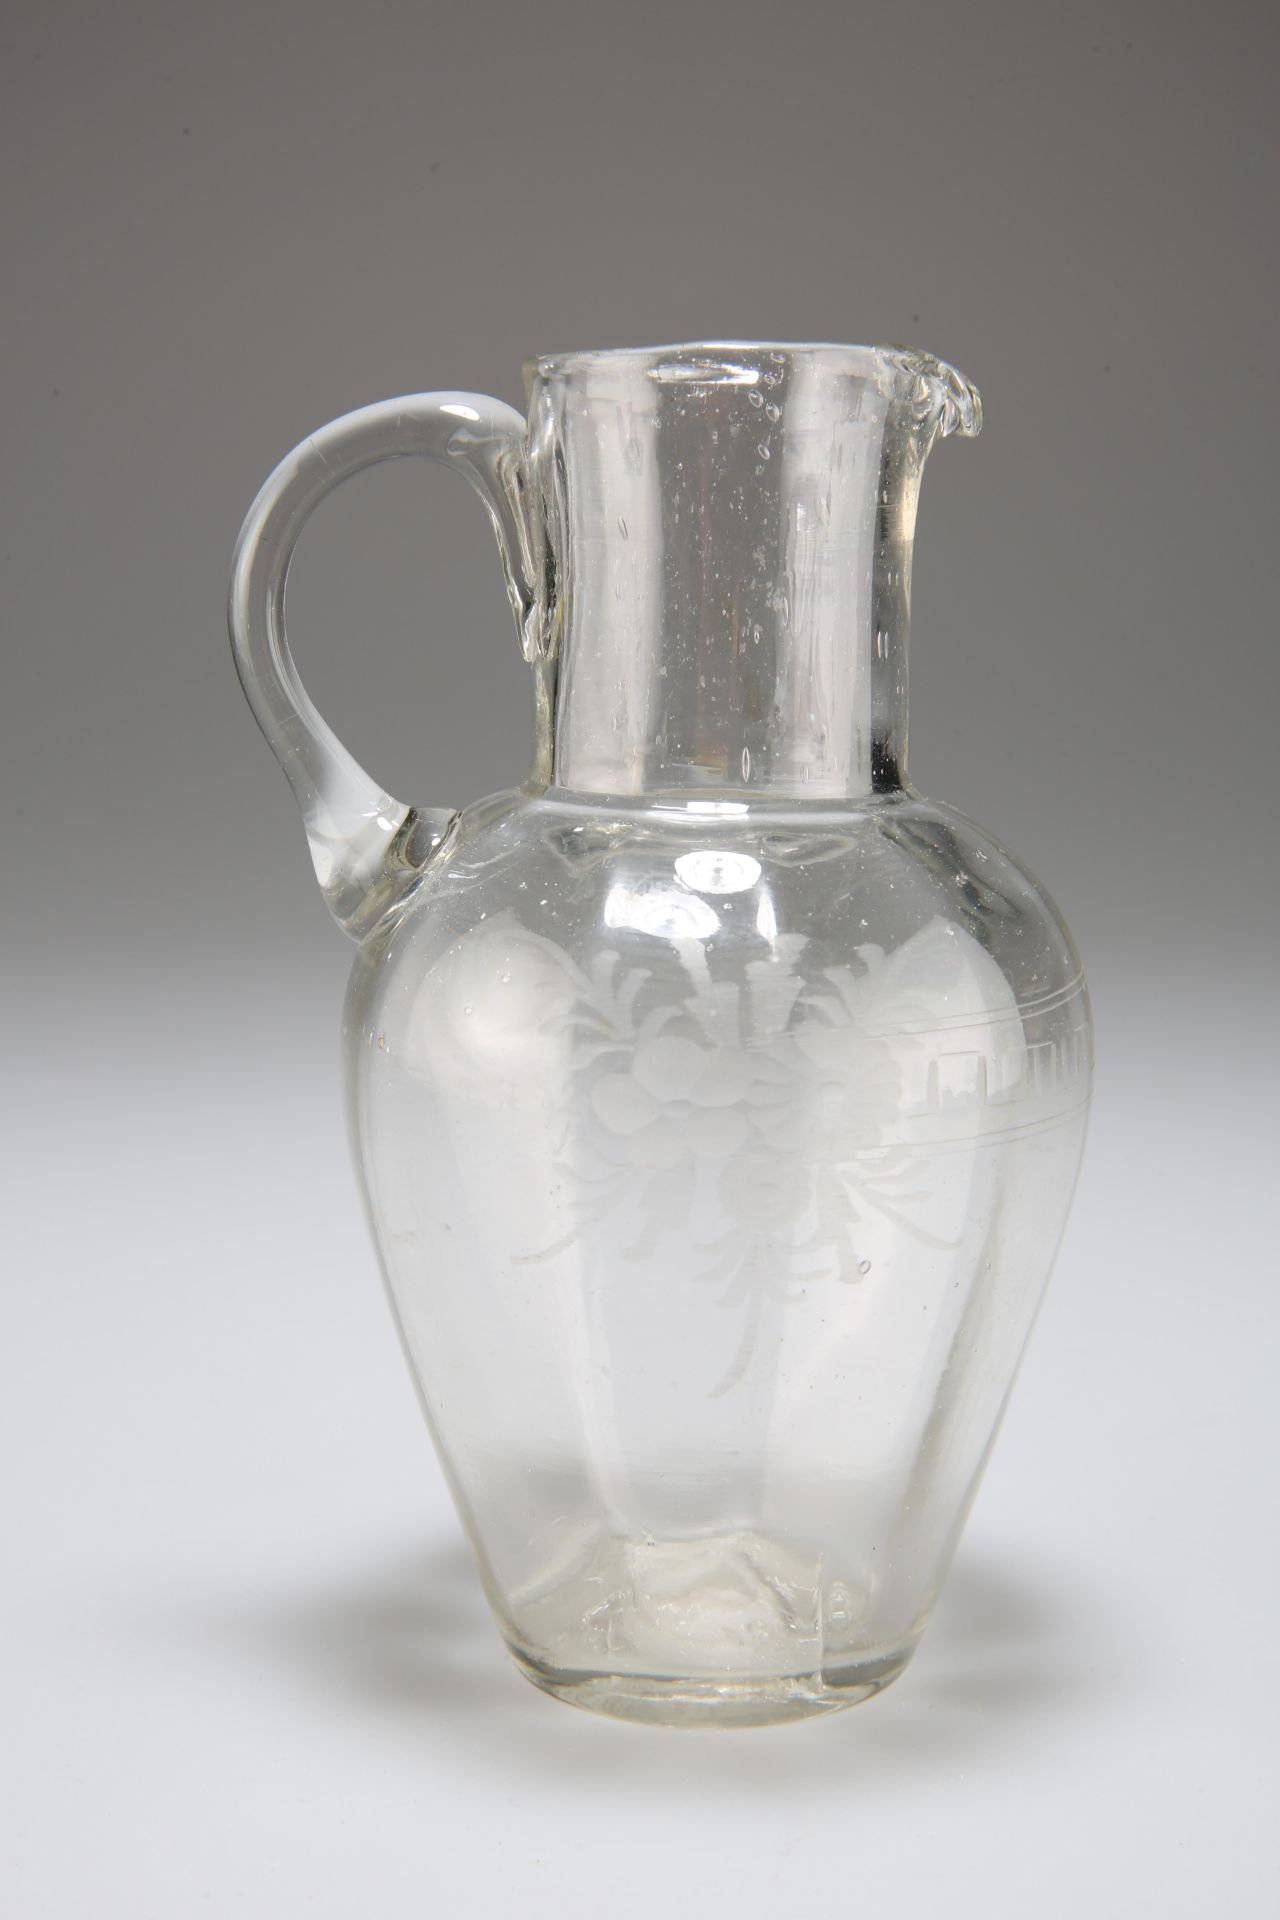 A RARE SHAPED ENGLISH GLASS SPIRIT JUG, CIRCA 1830